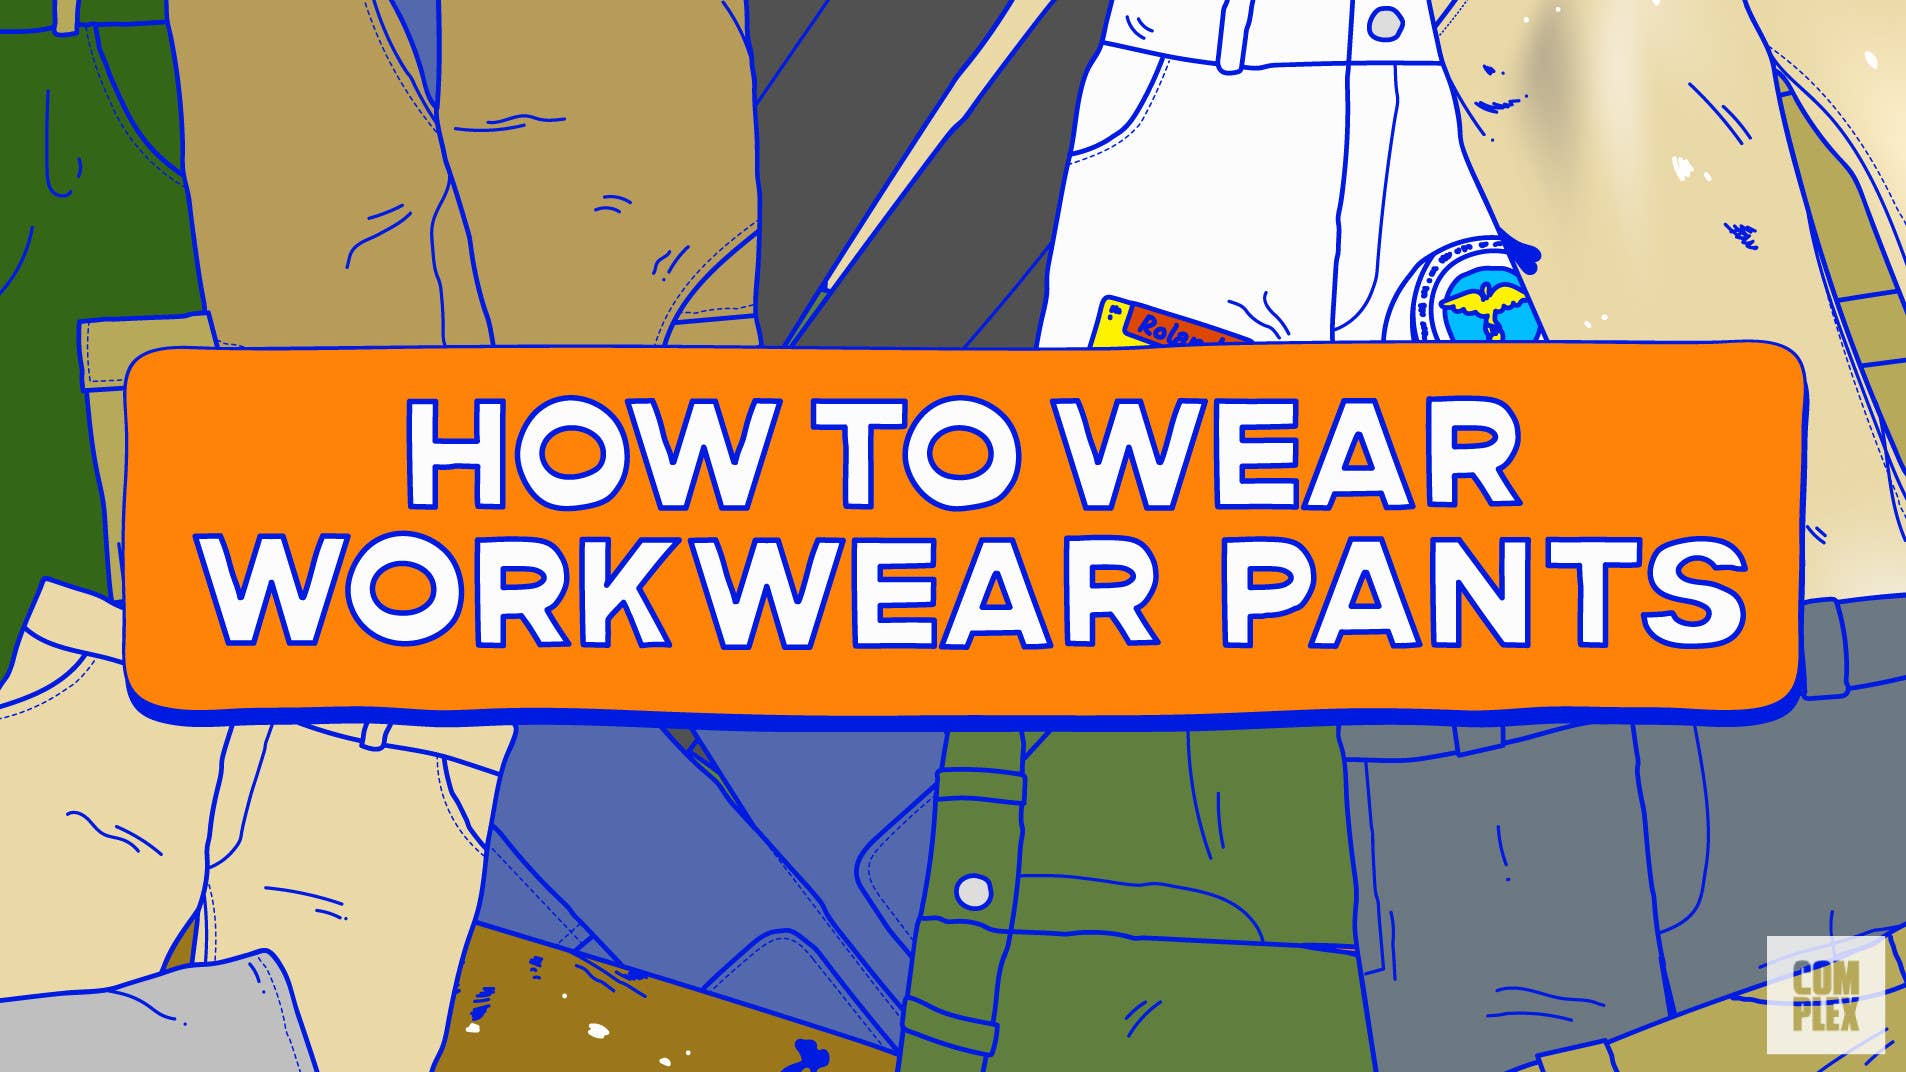 How to Wear Workwear Pants